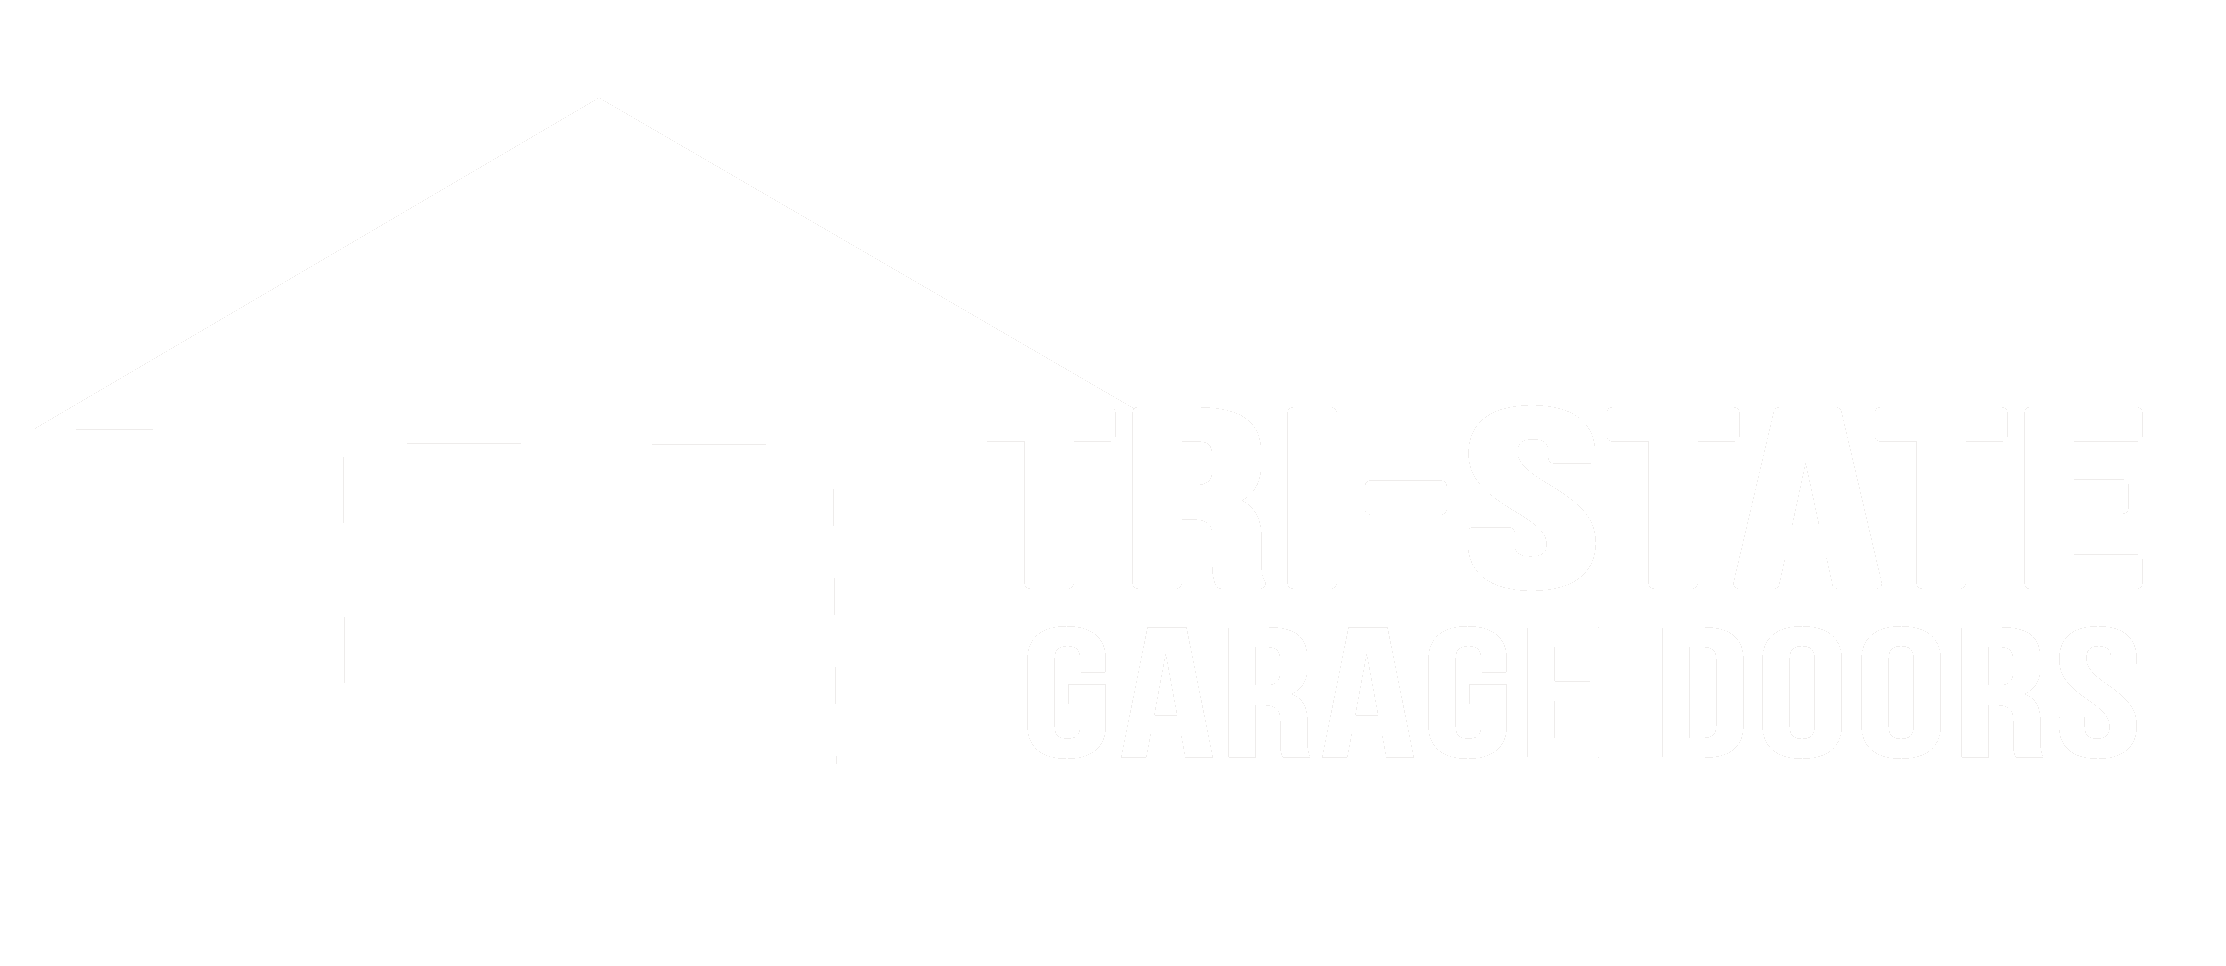 Garage Door Services Company White Logo